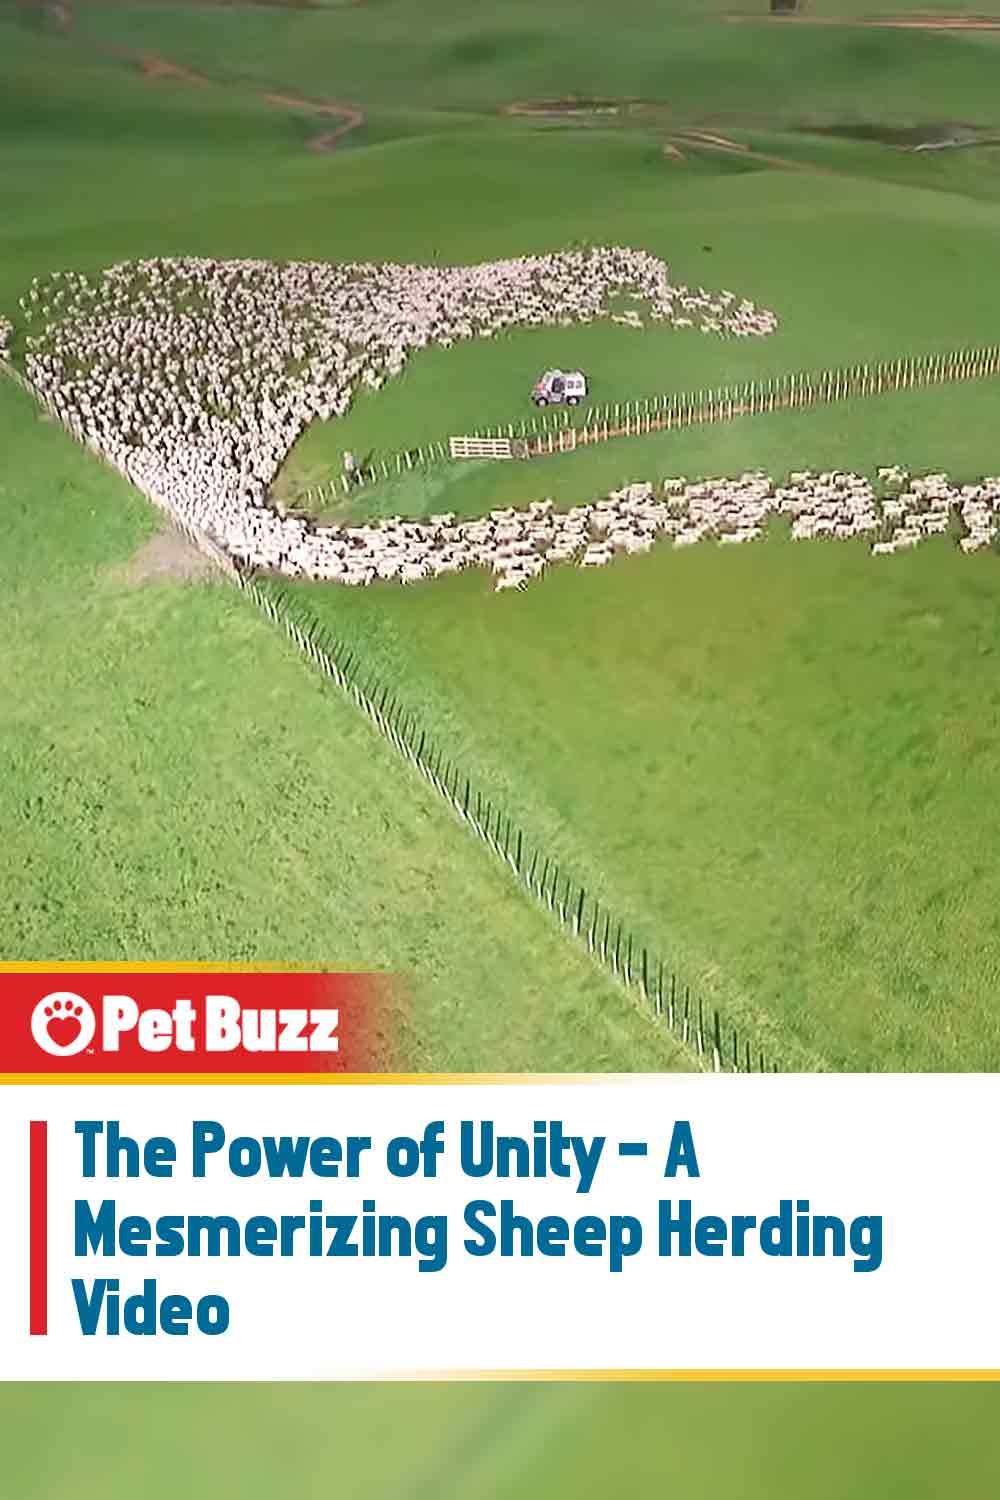 The Power of Unity - A Mesmerizing Sheep Herding Video